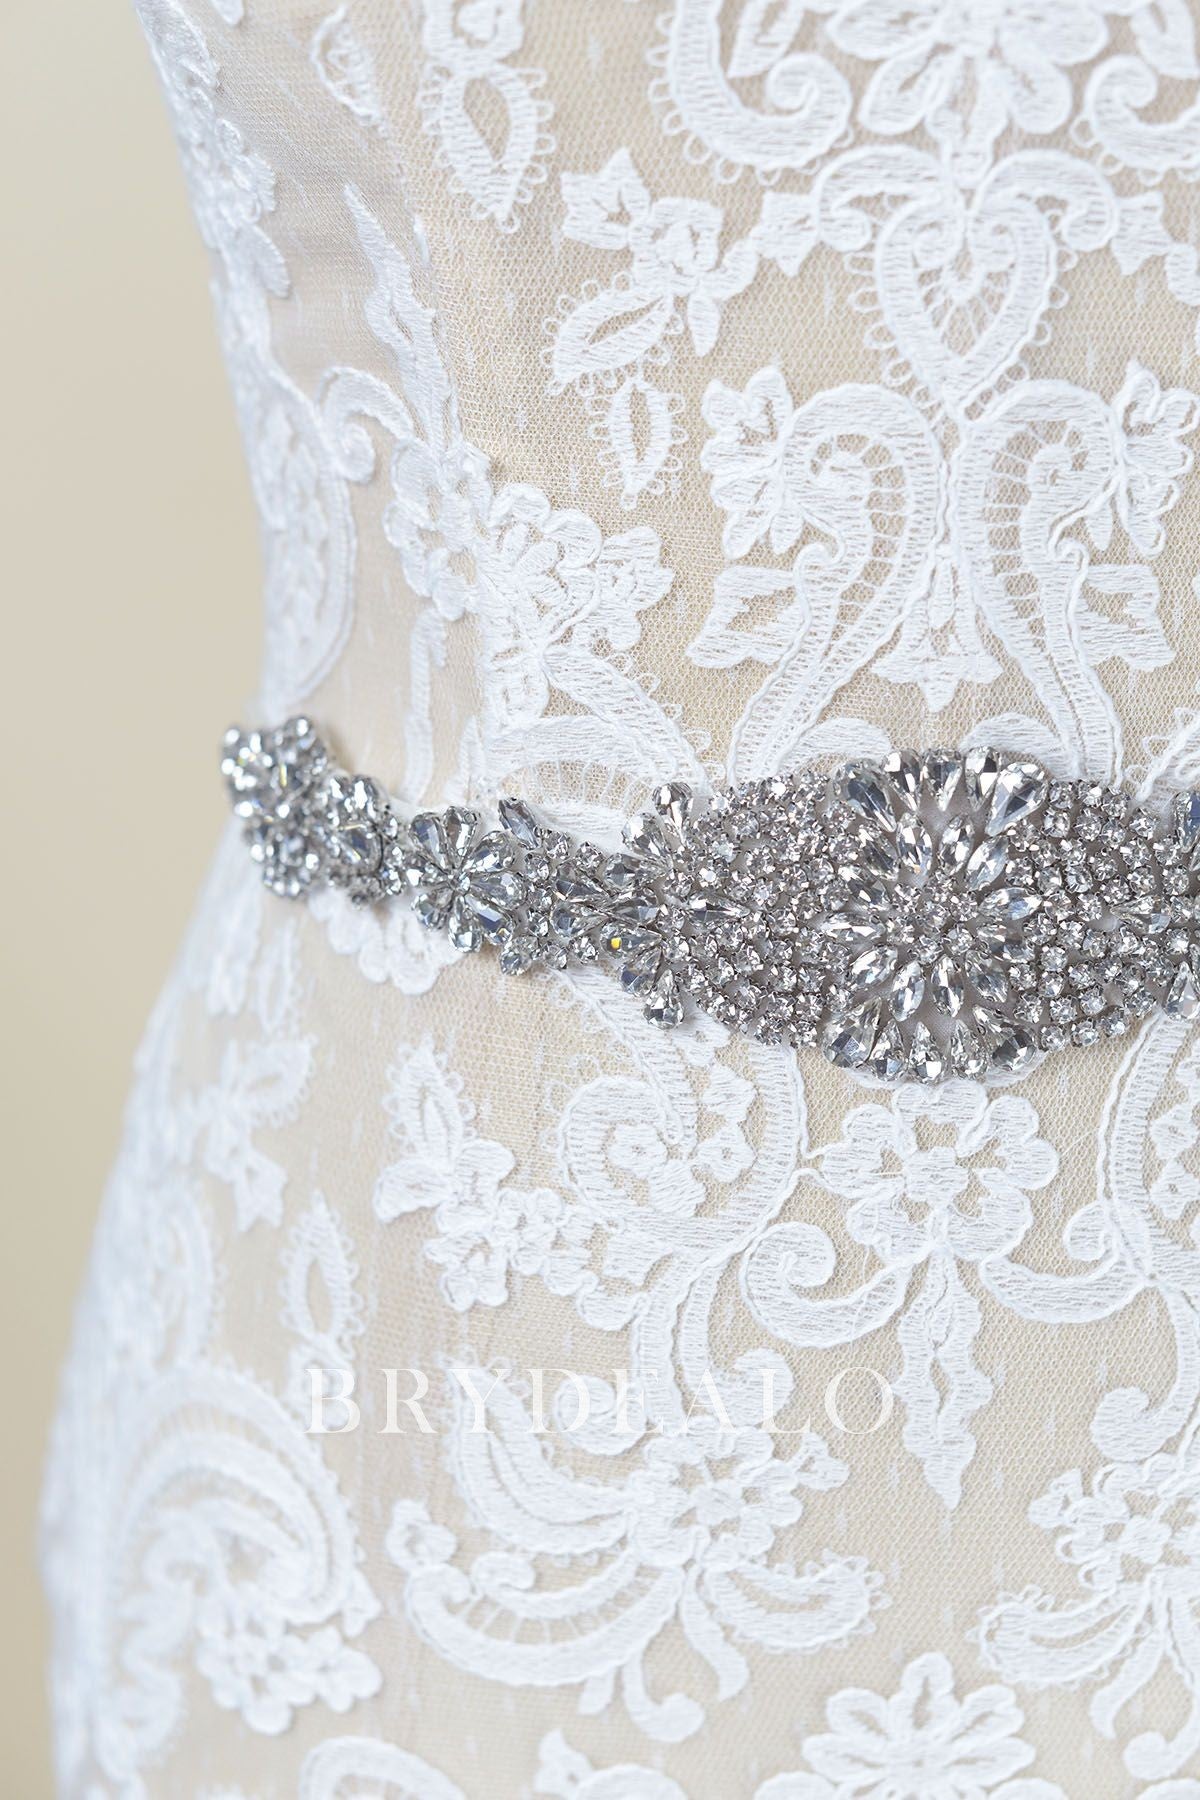 Popular High-quality Rhinestones Wedding Sash Belt